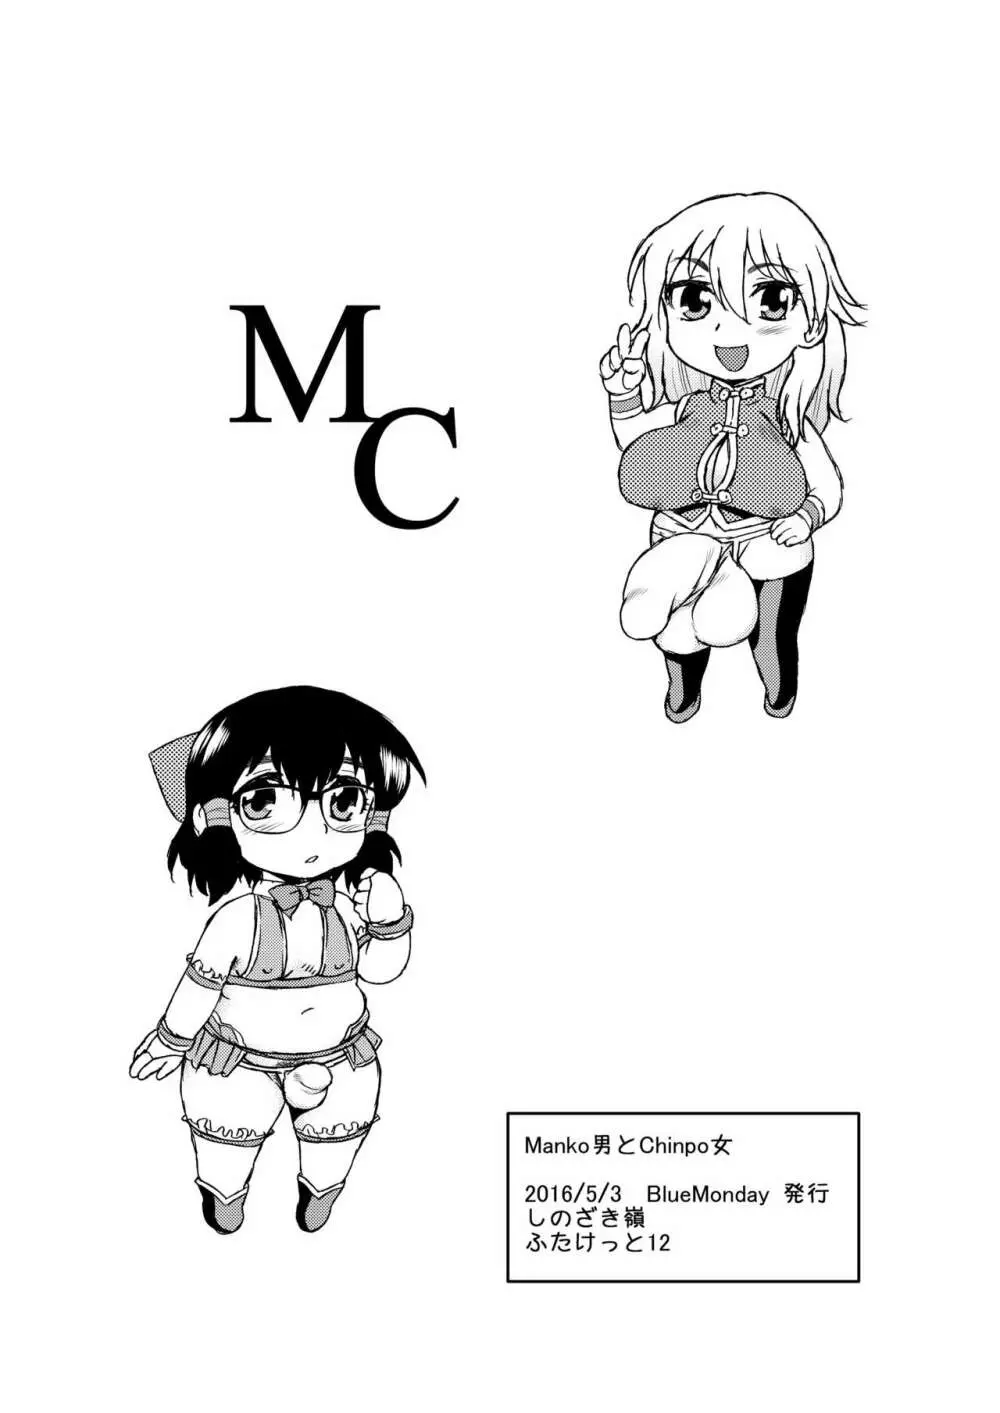 Manko男とChinpo女 - page22